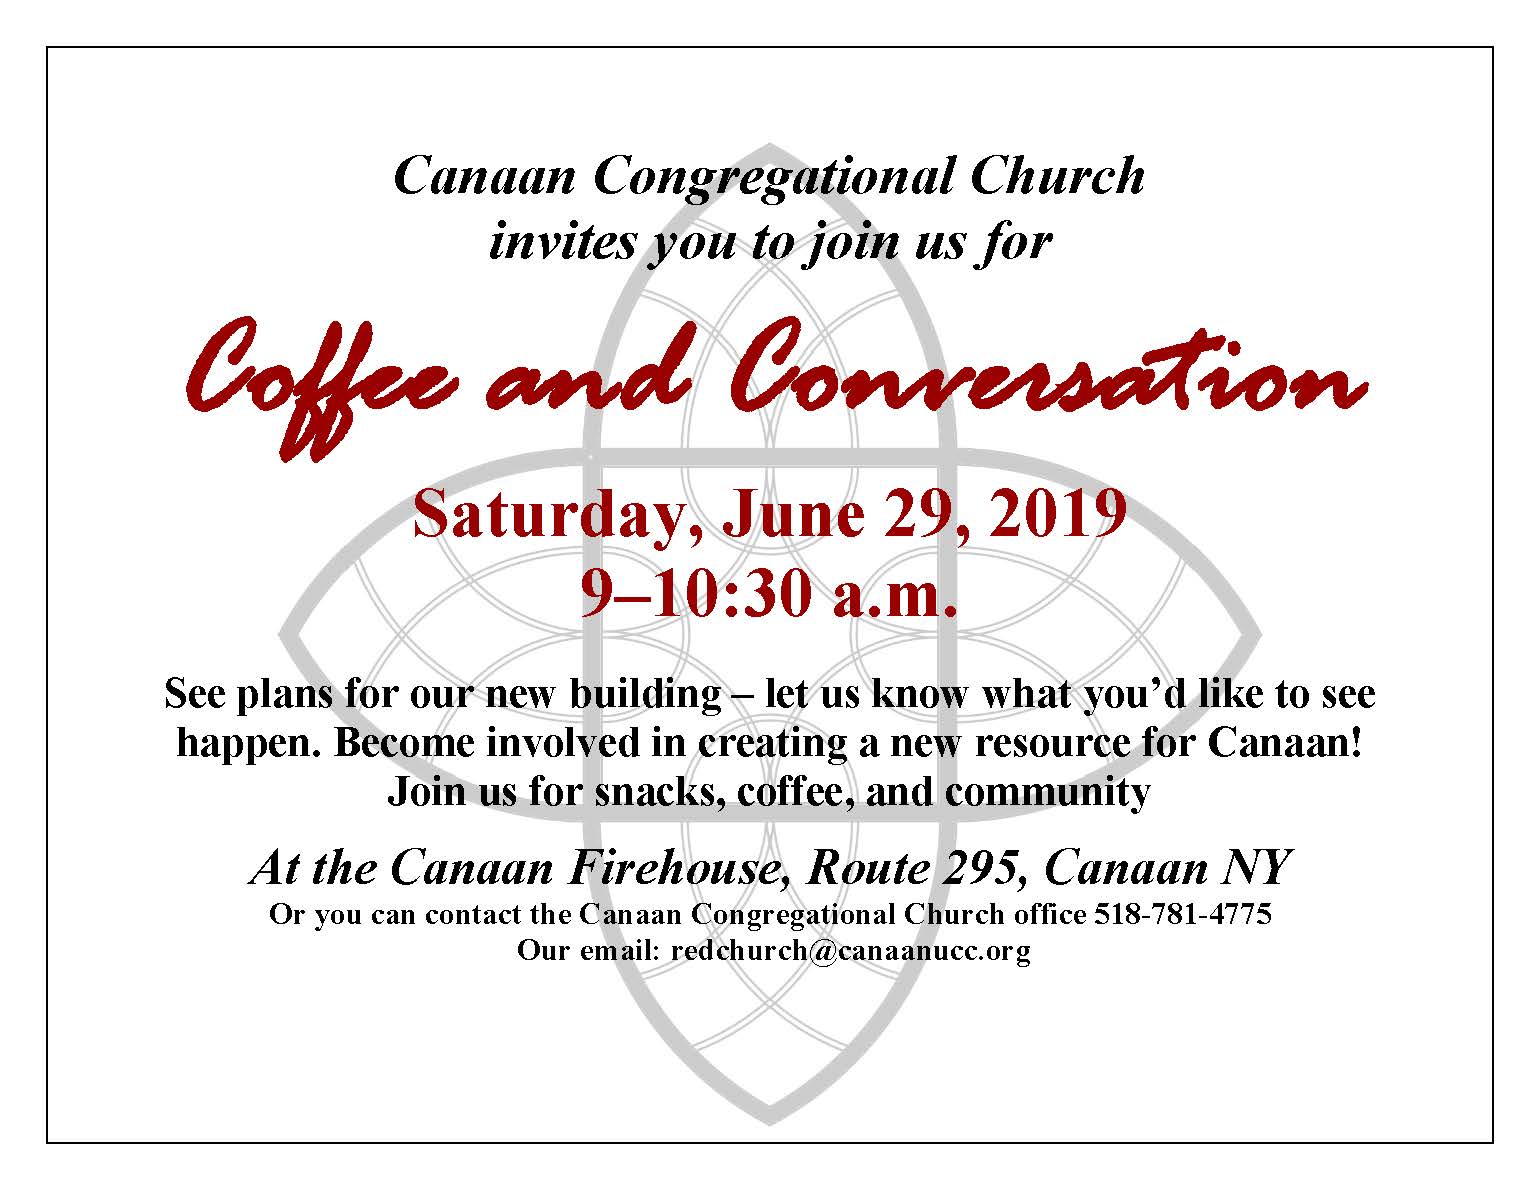 Coffee and Conversation invitation